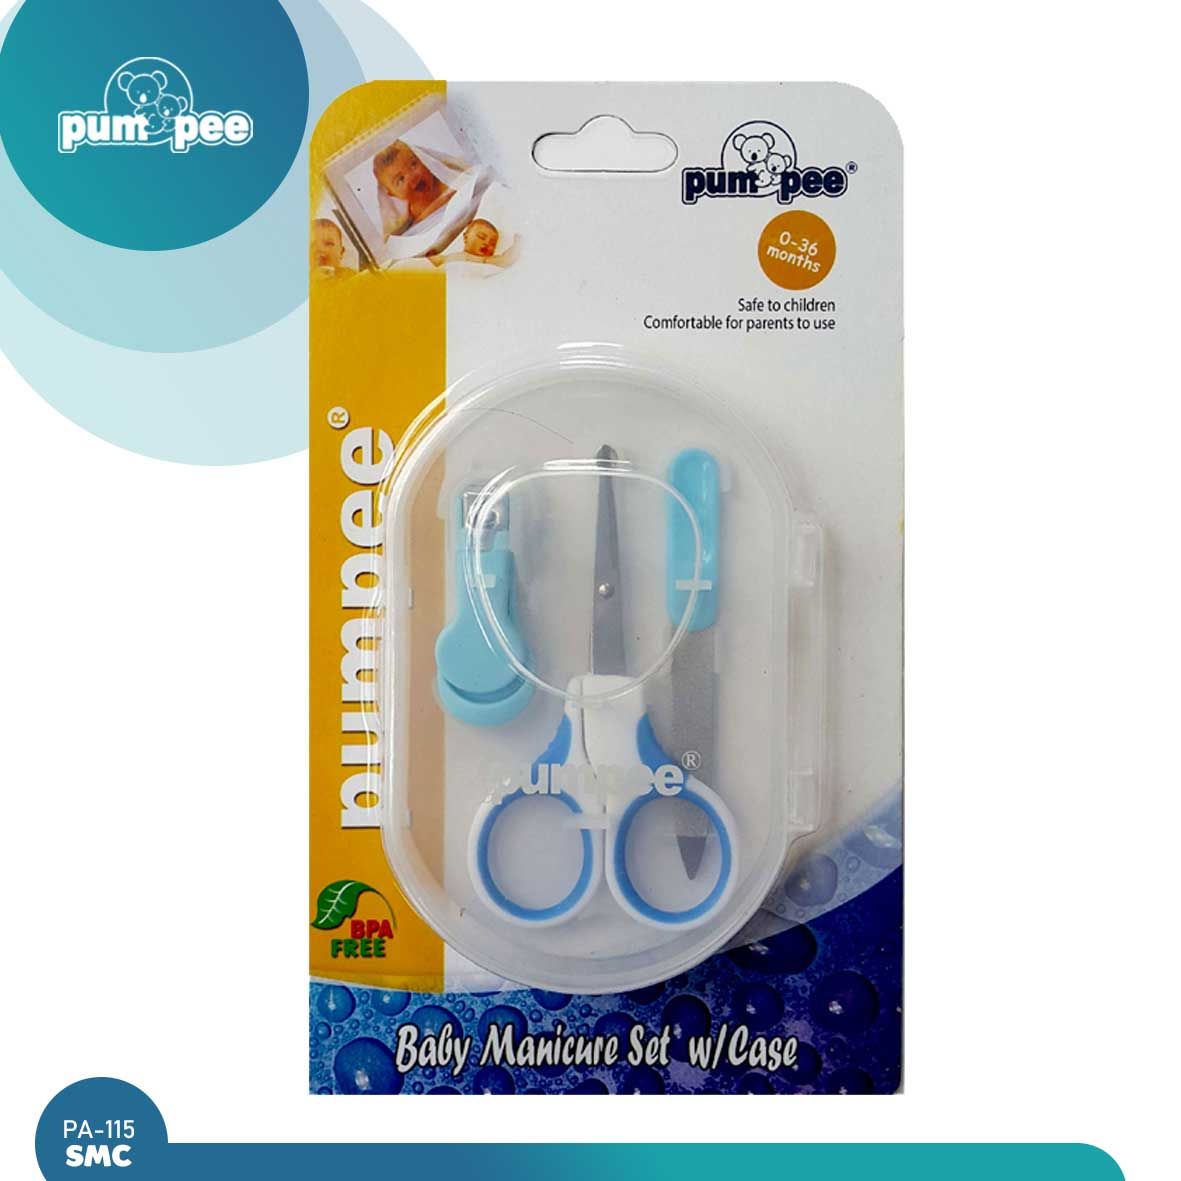 Pumpee Baby Manicure Set w/ Case | PA-115SMC - 1